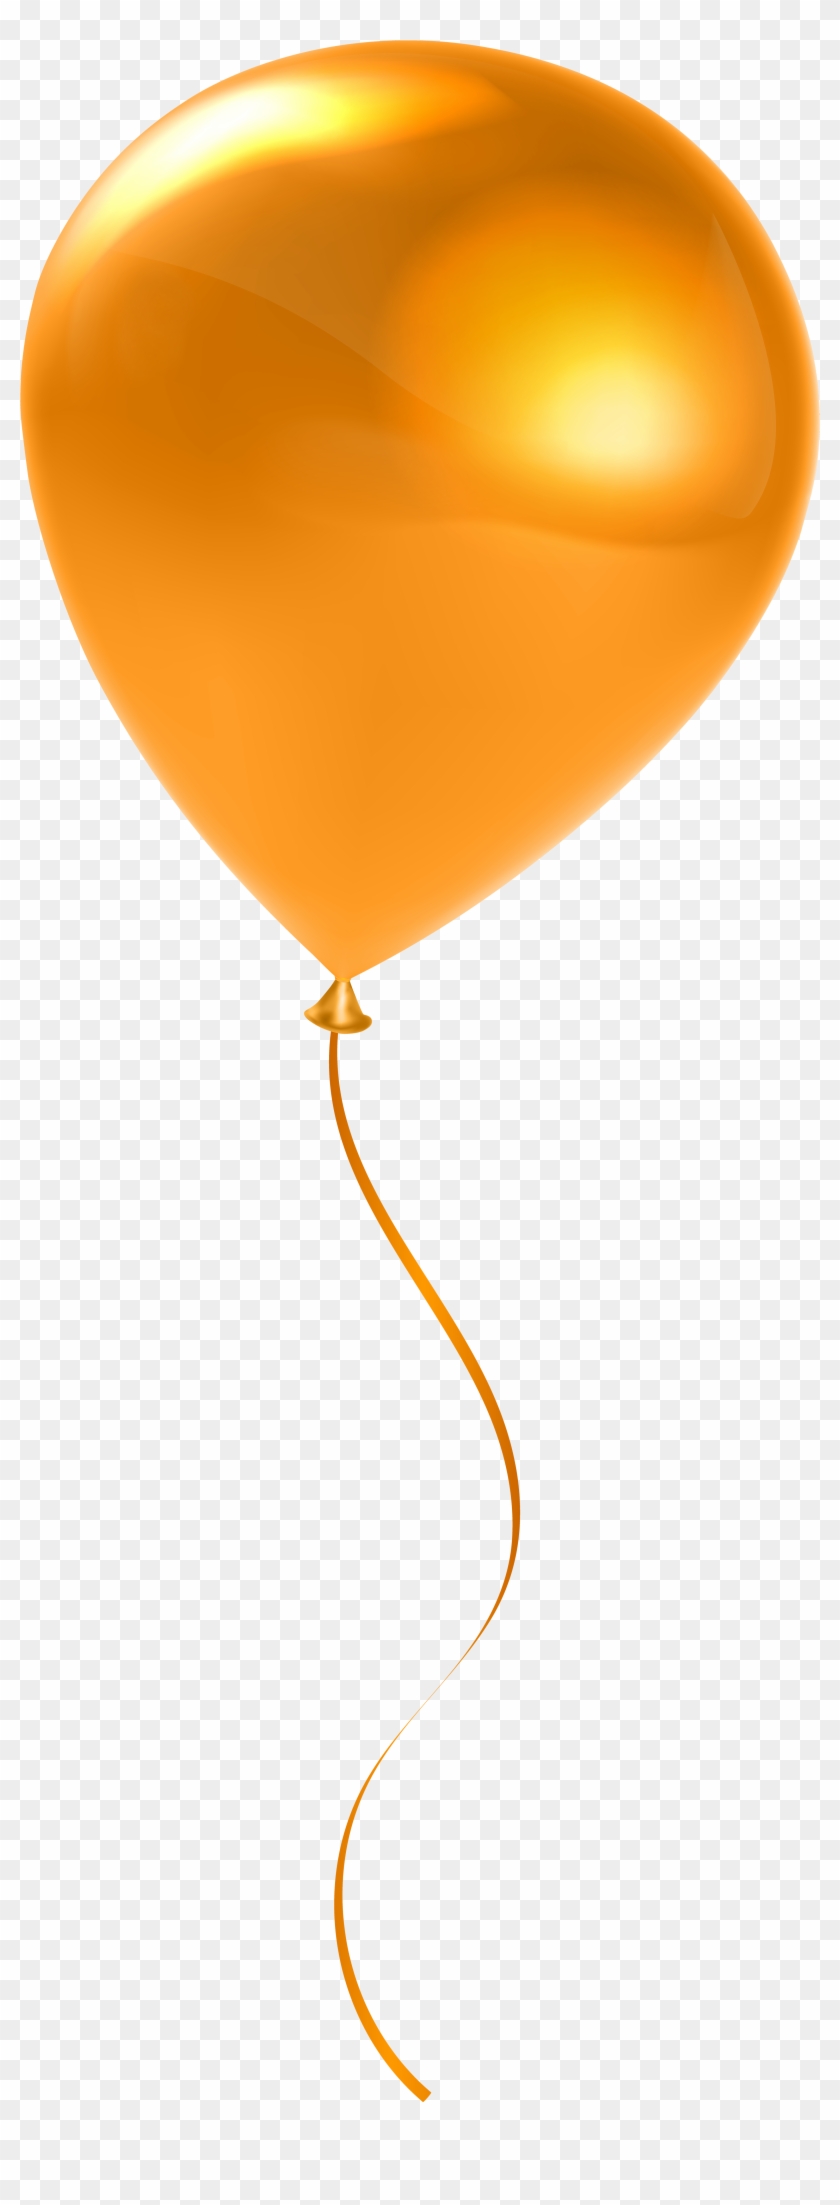 Single Orange Balloon Transparent Clip Art - Orange Balloons Transparent Background #275227